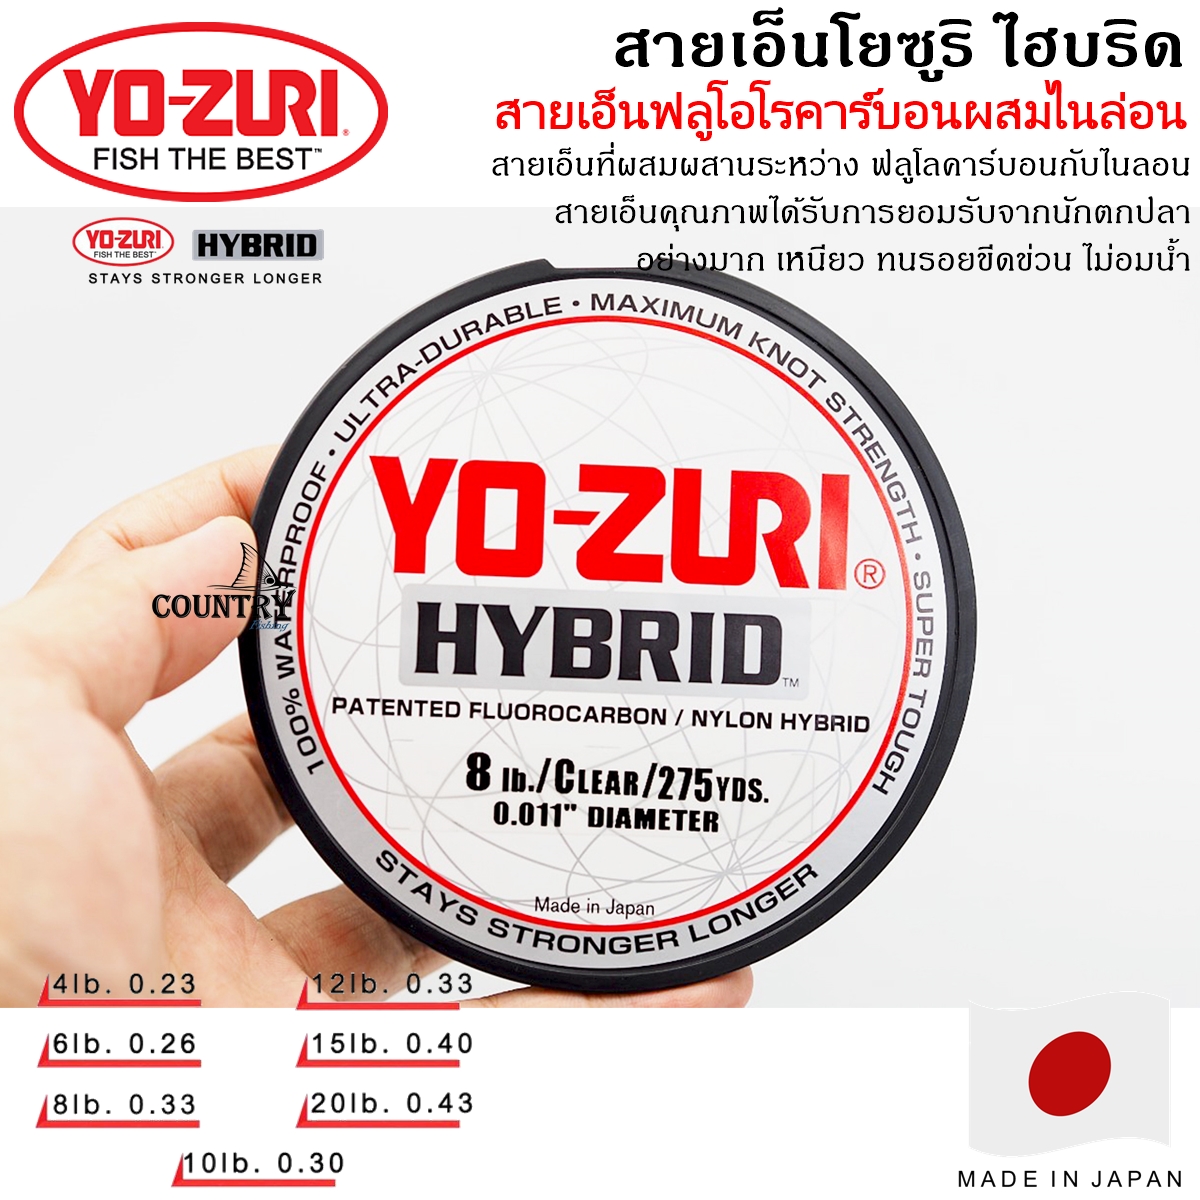 Yozuri HYBRID LINE สายเอ็น โยซูริ ไฮบริด สายเอ็นที่ผสมผสานระหว่าง